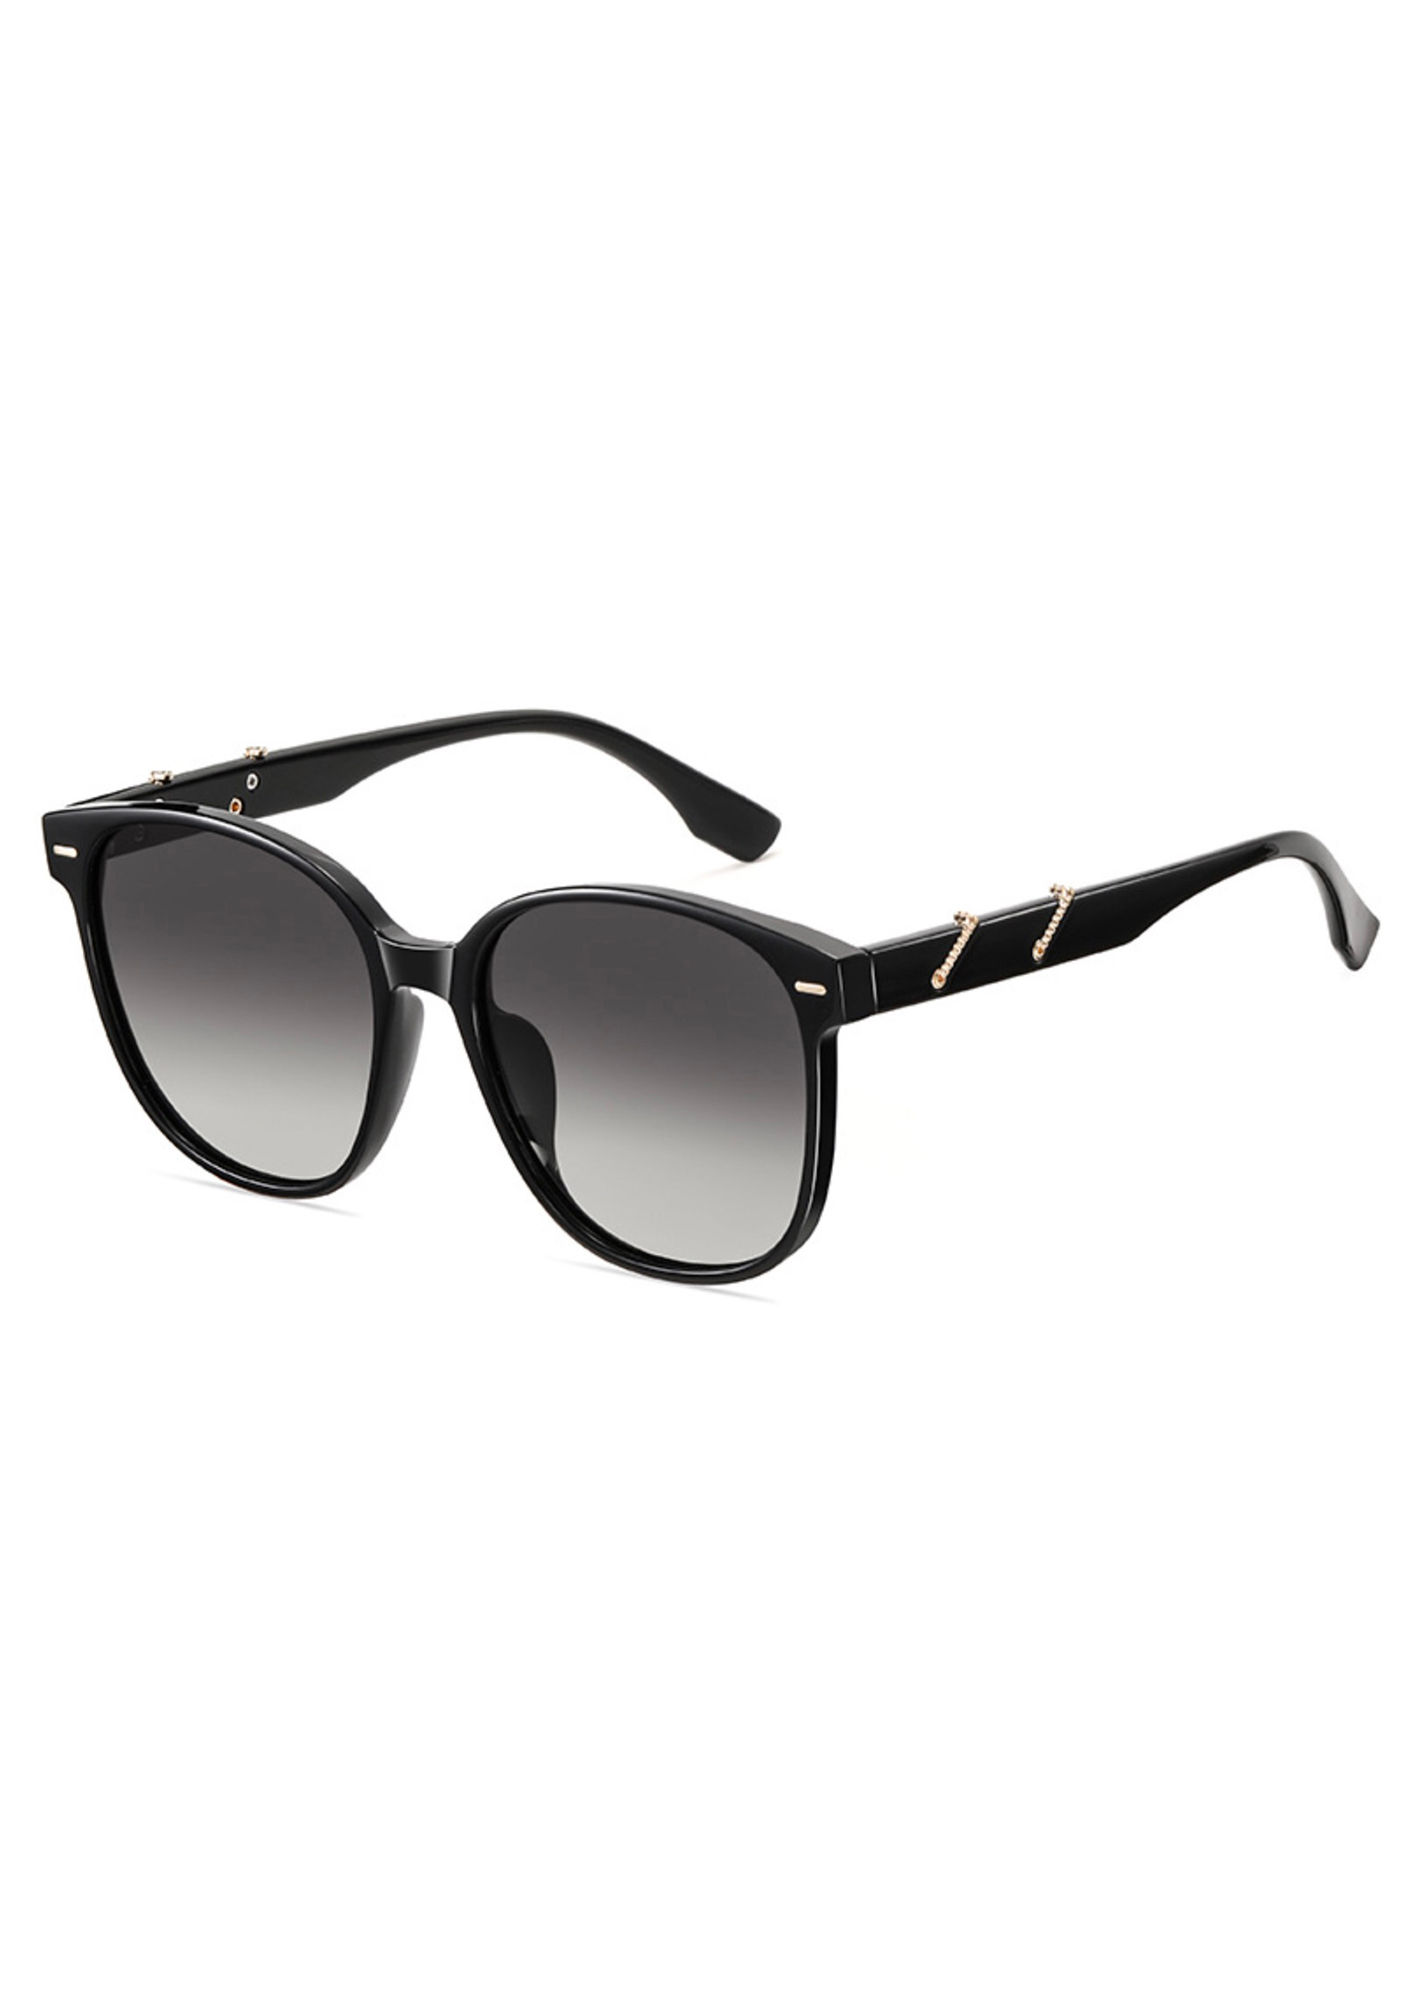 Buy Xiraro Wayfarer Sunglasses for Women (TB506) Online in India – Spexwale